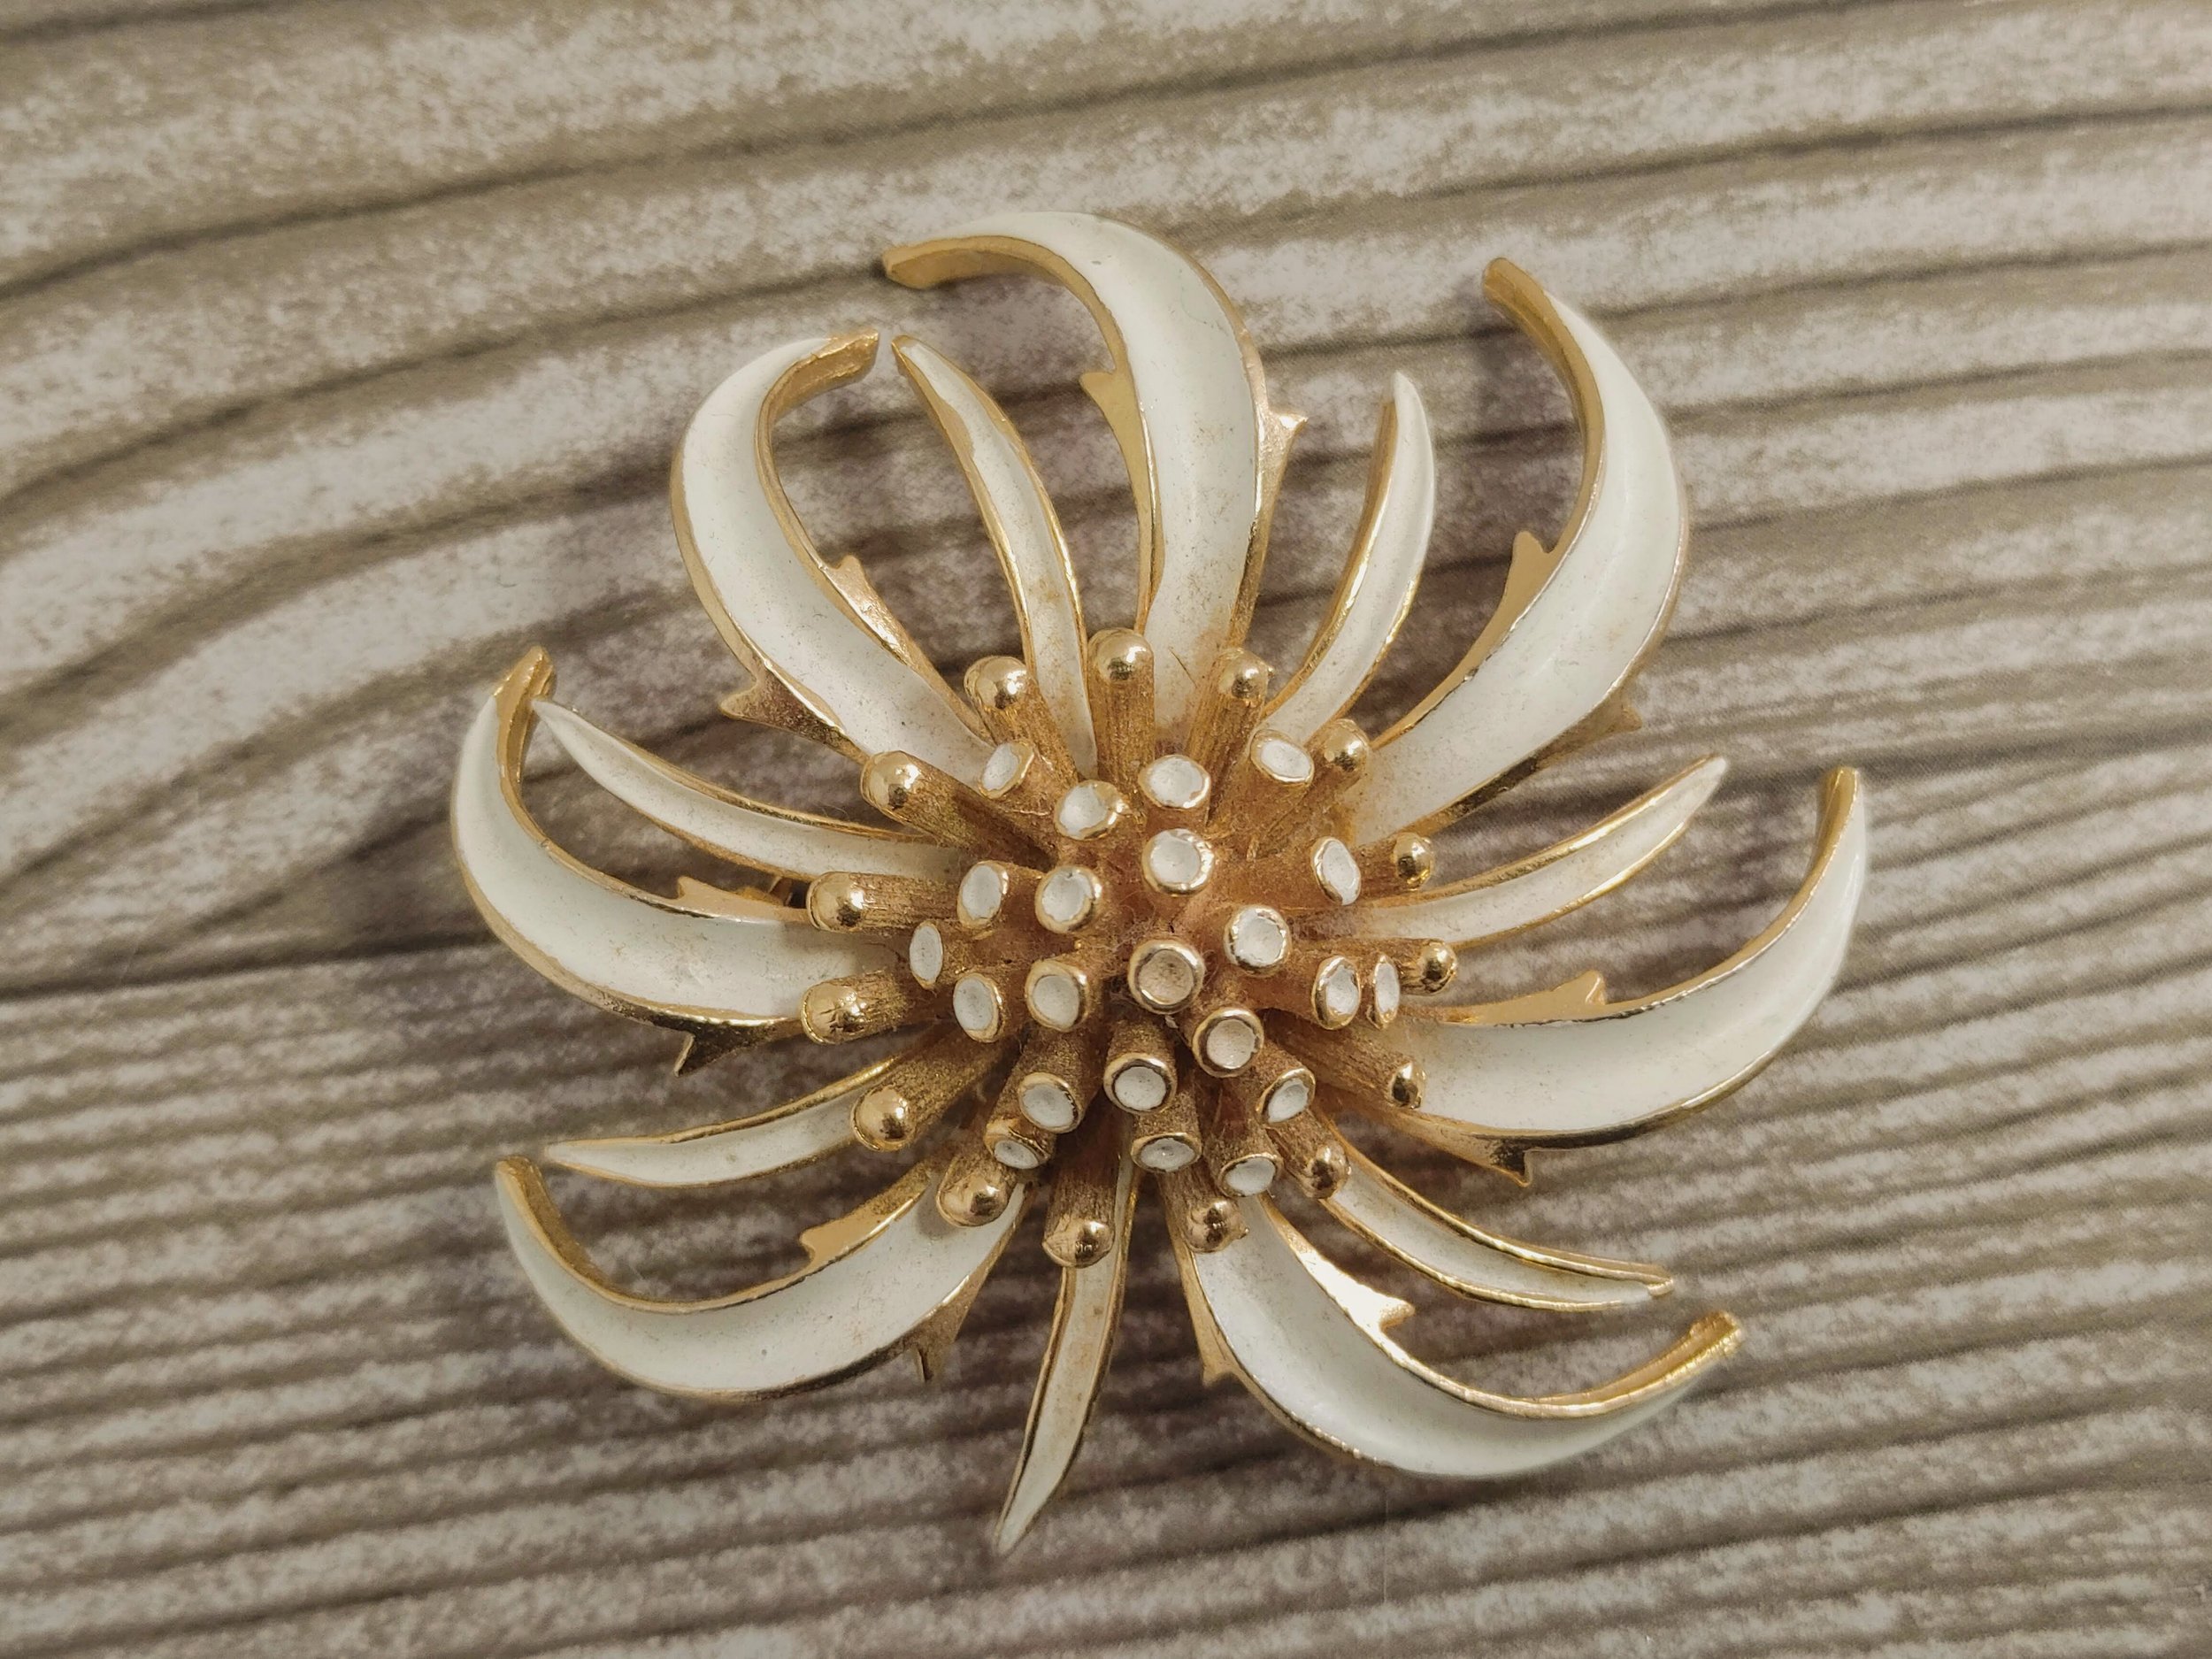 DREAMLANDSALES Garden Jewelry Collection Golden Beaded Framed Petal Full Bloom Black Rose Brooch Pin